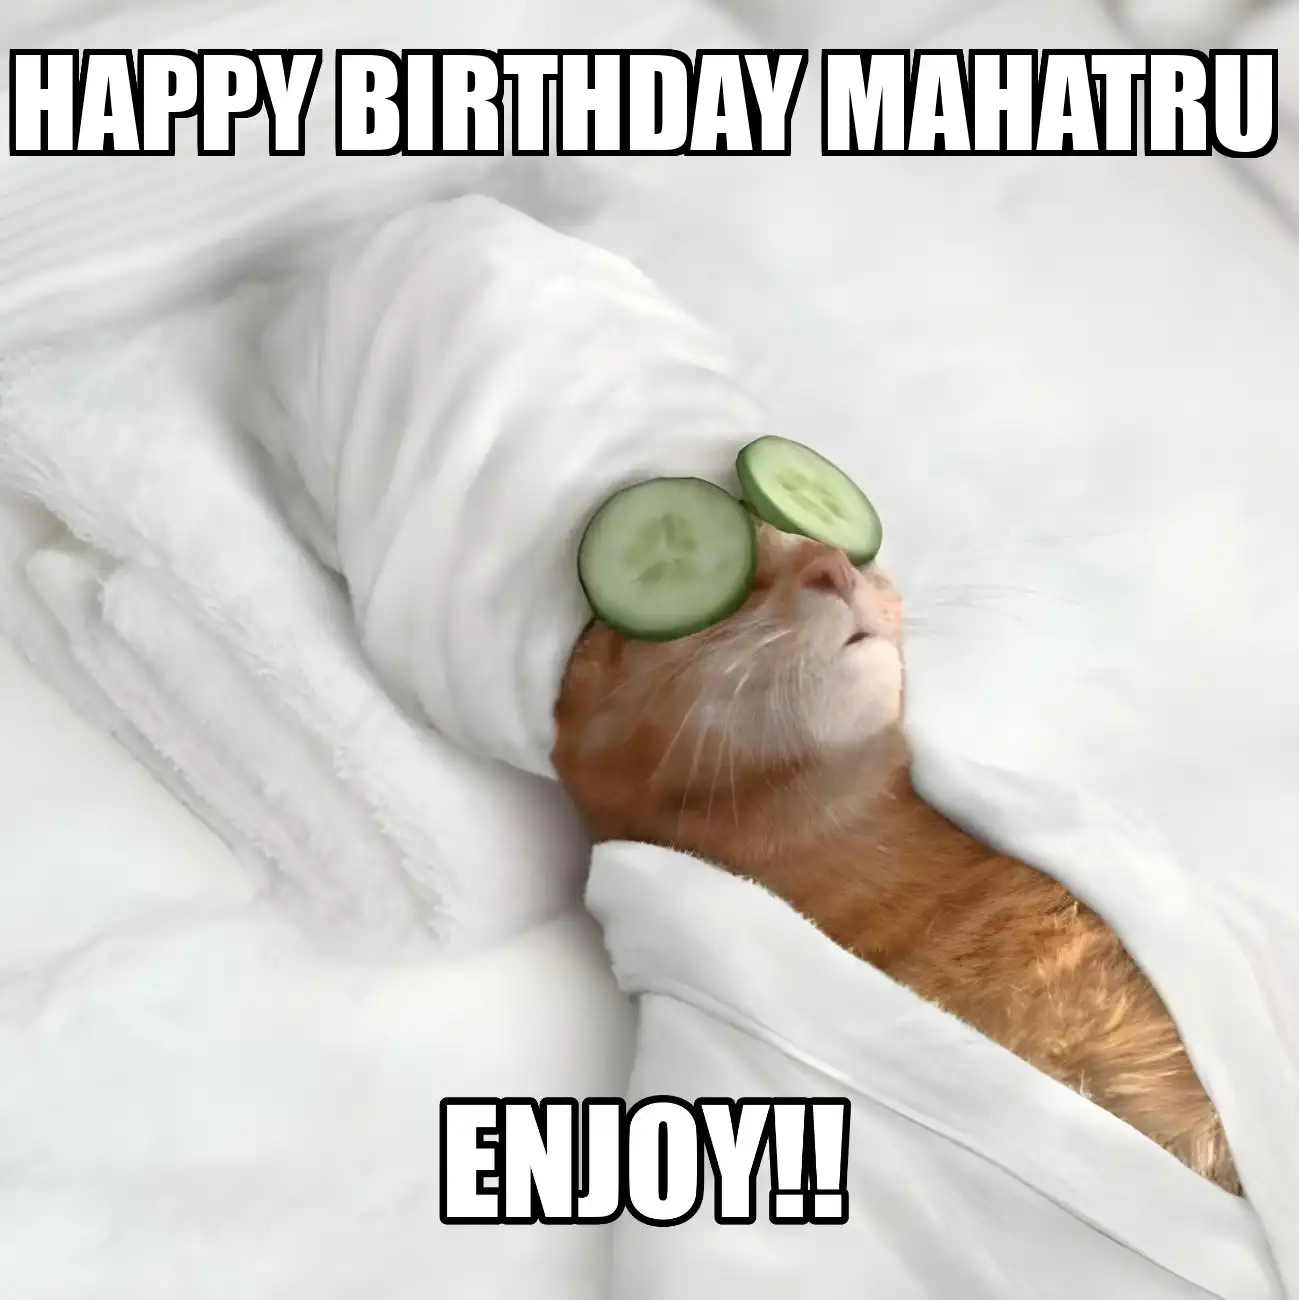 Happy Birthday Mahatru Enjoy Cat Meme